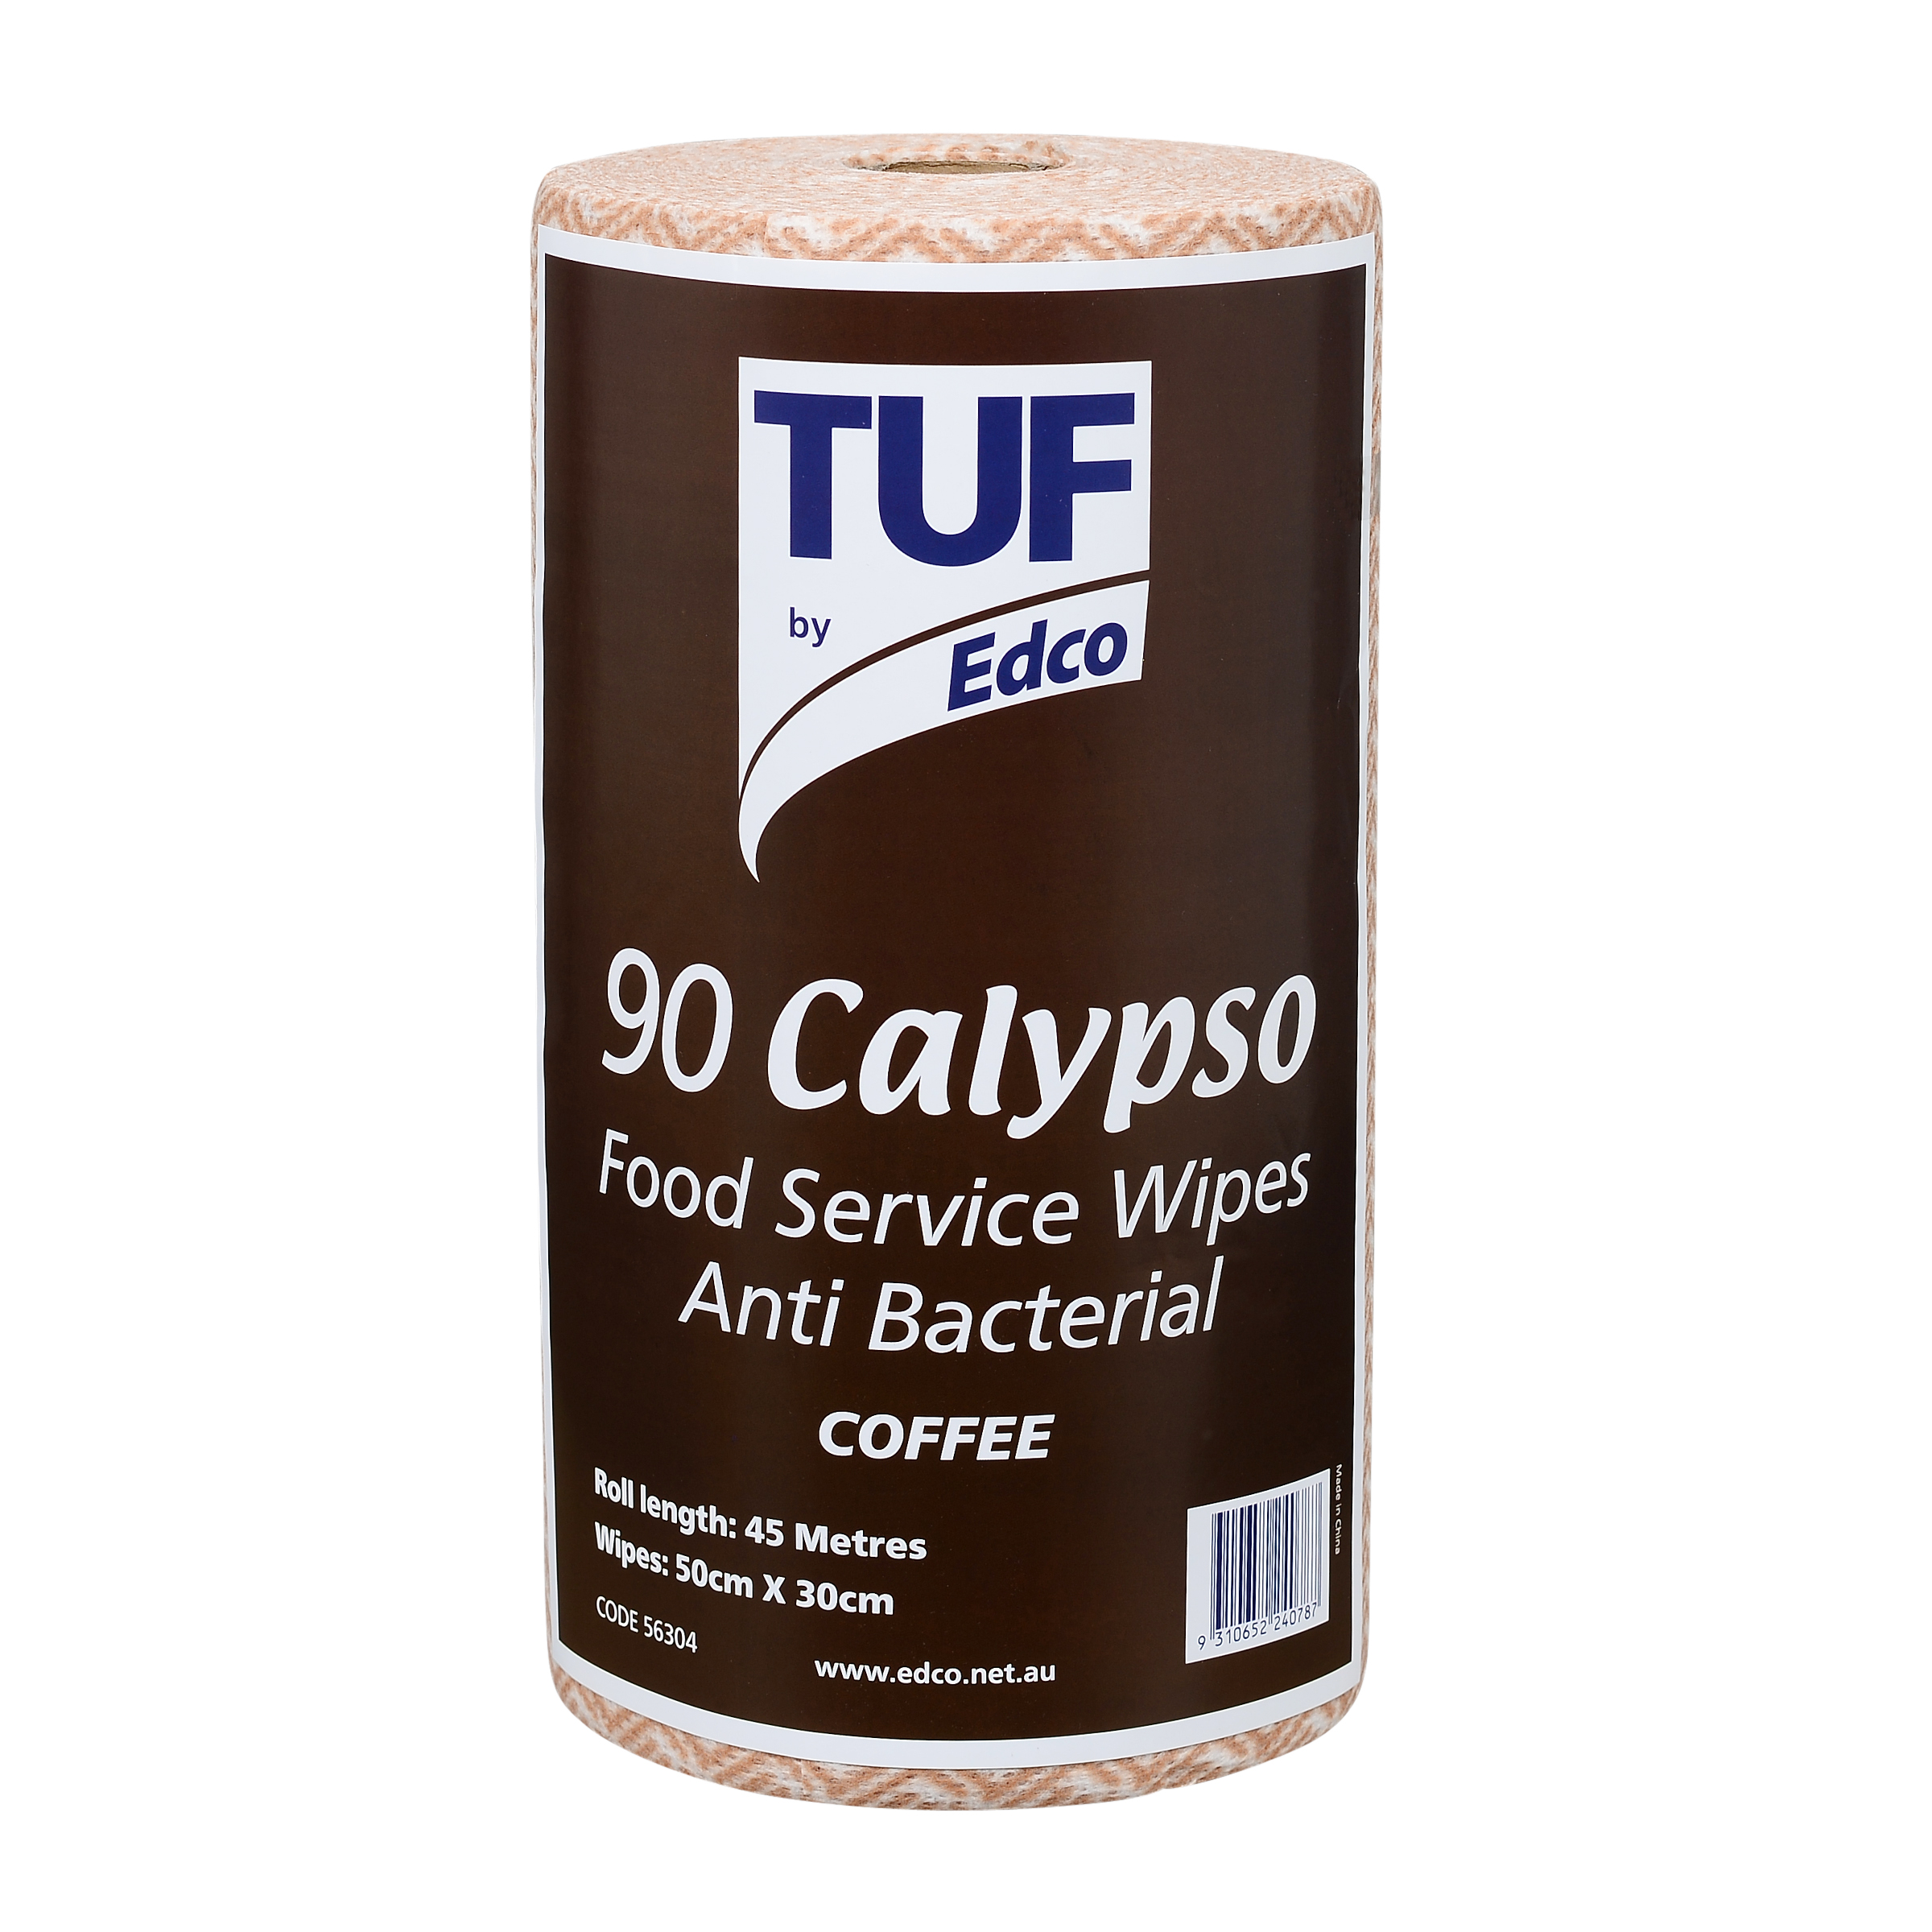 56304 Tuf by Edco Calypso Wipes – Coffee IP